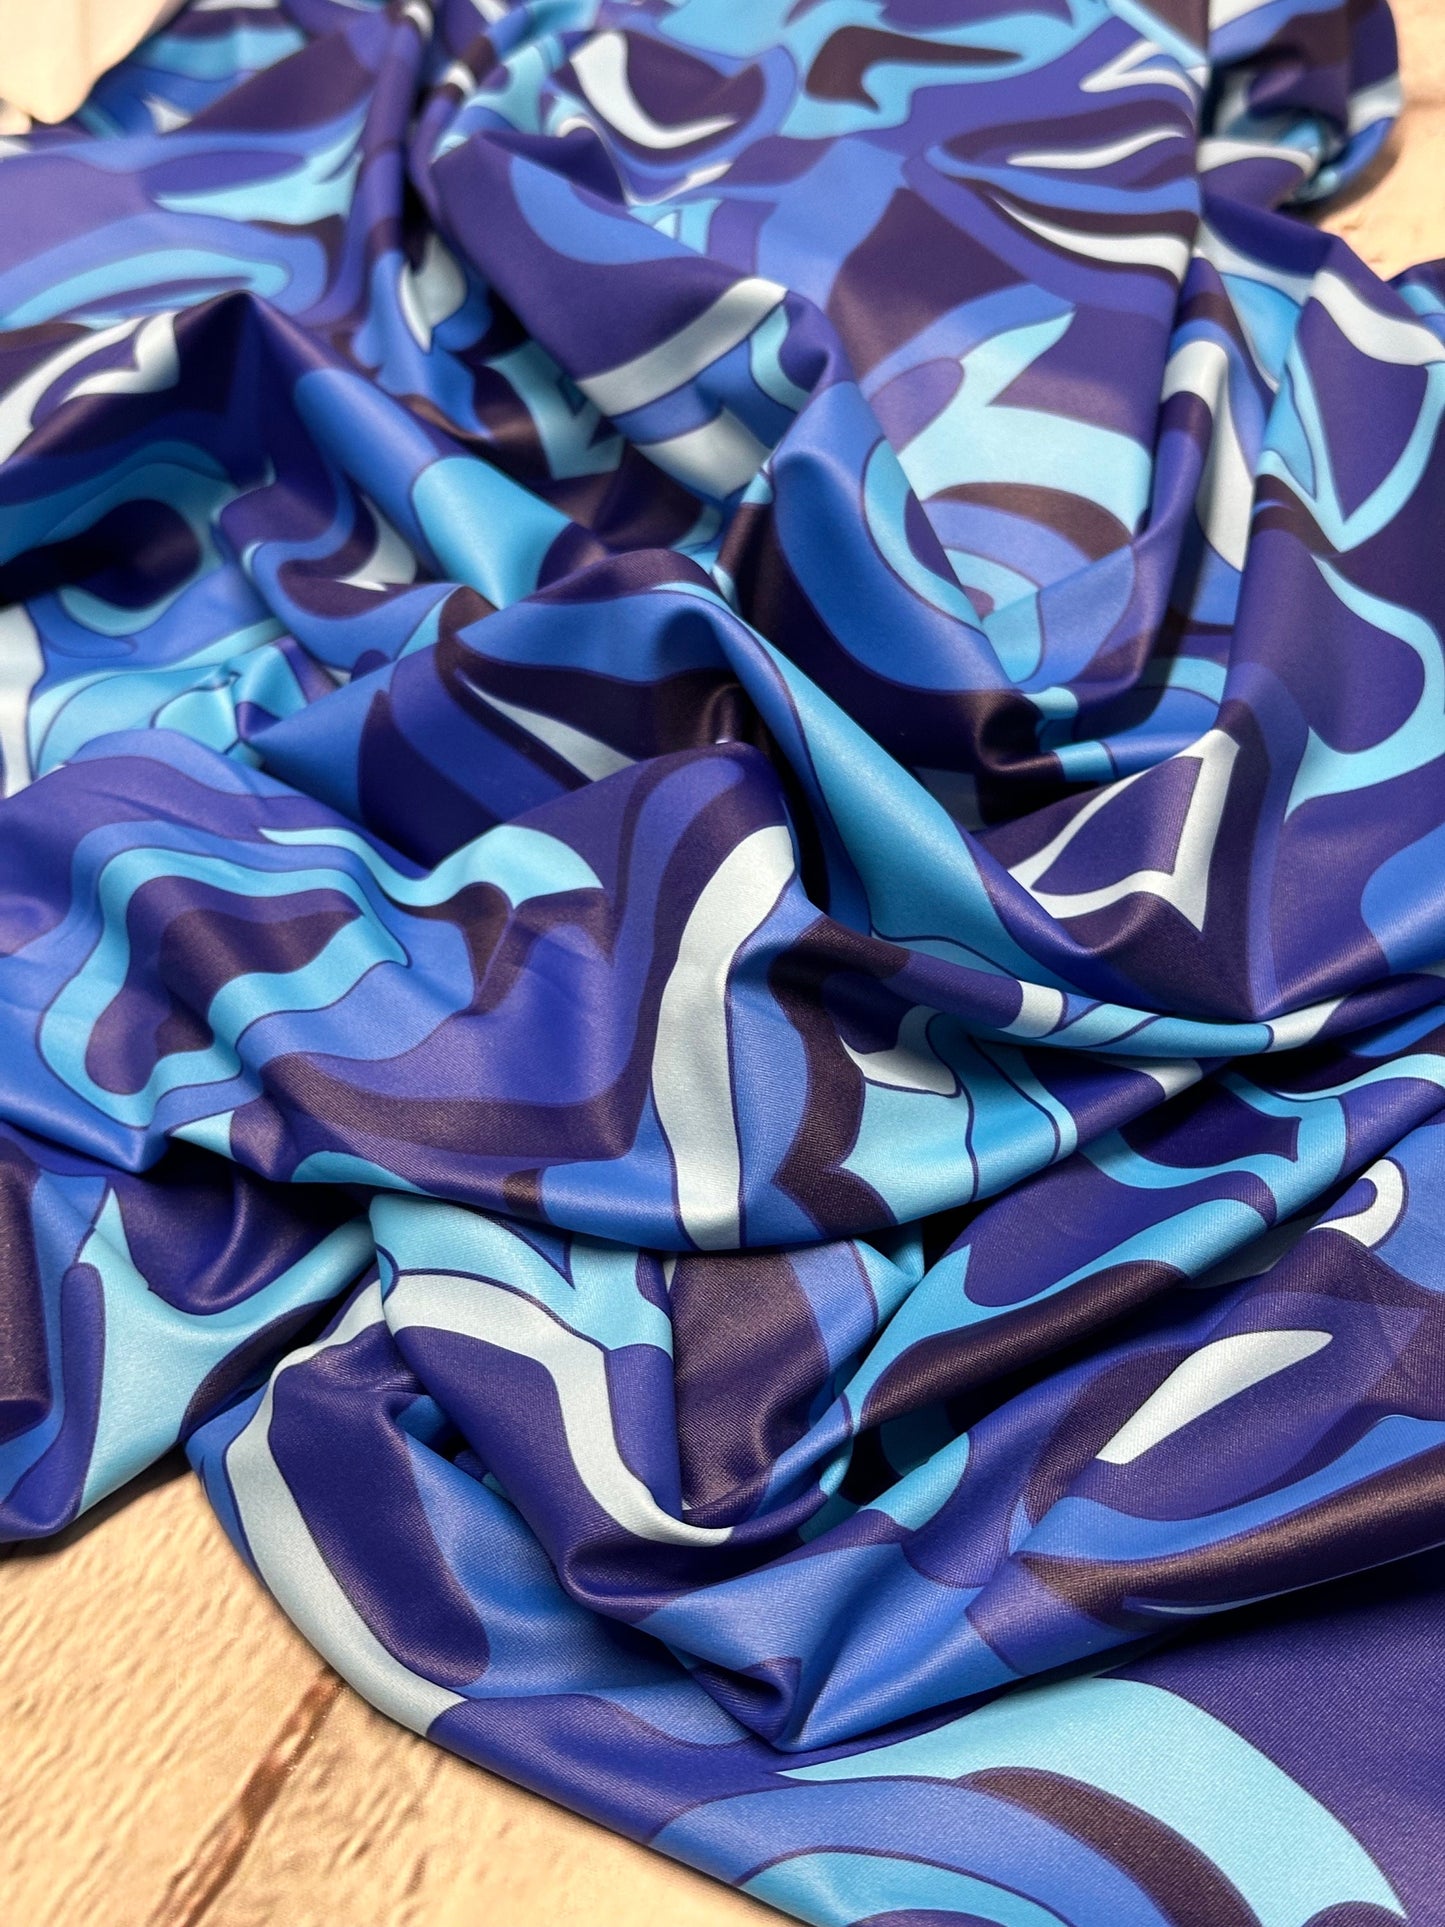 4 Way Stretch Print Nylon Spandex Fabric By The Yard Tricot Swim Wear Bikini Active Wear Abstract Geometric Shapes  Swirls Retro BohoBlue